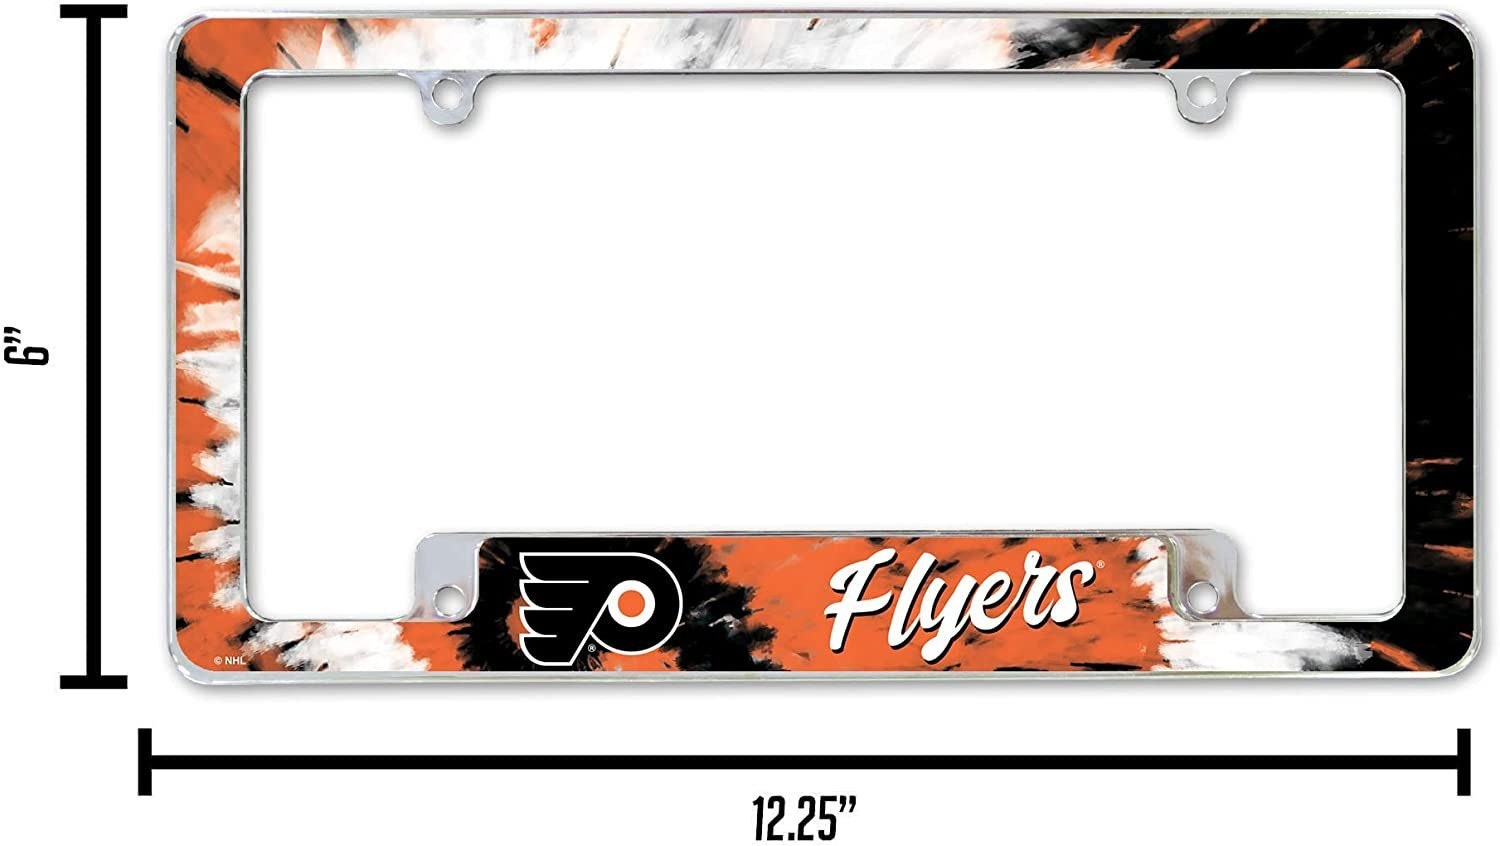 Philadelphia Flyers Chrome License Plate Frame - Auto Accessories - NHL